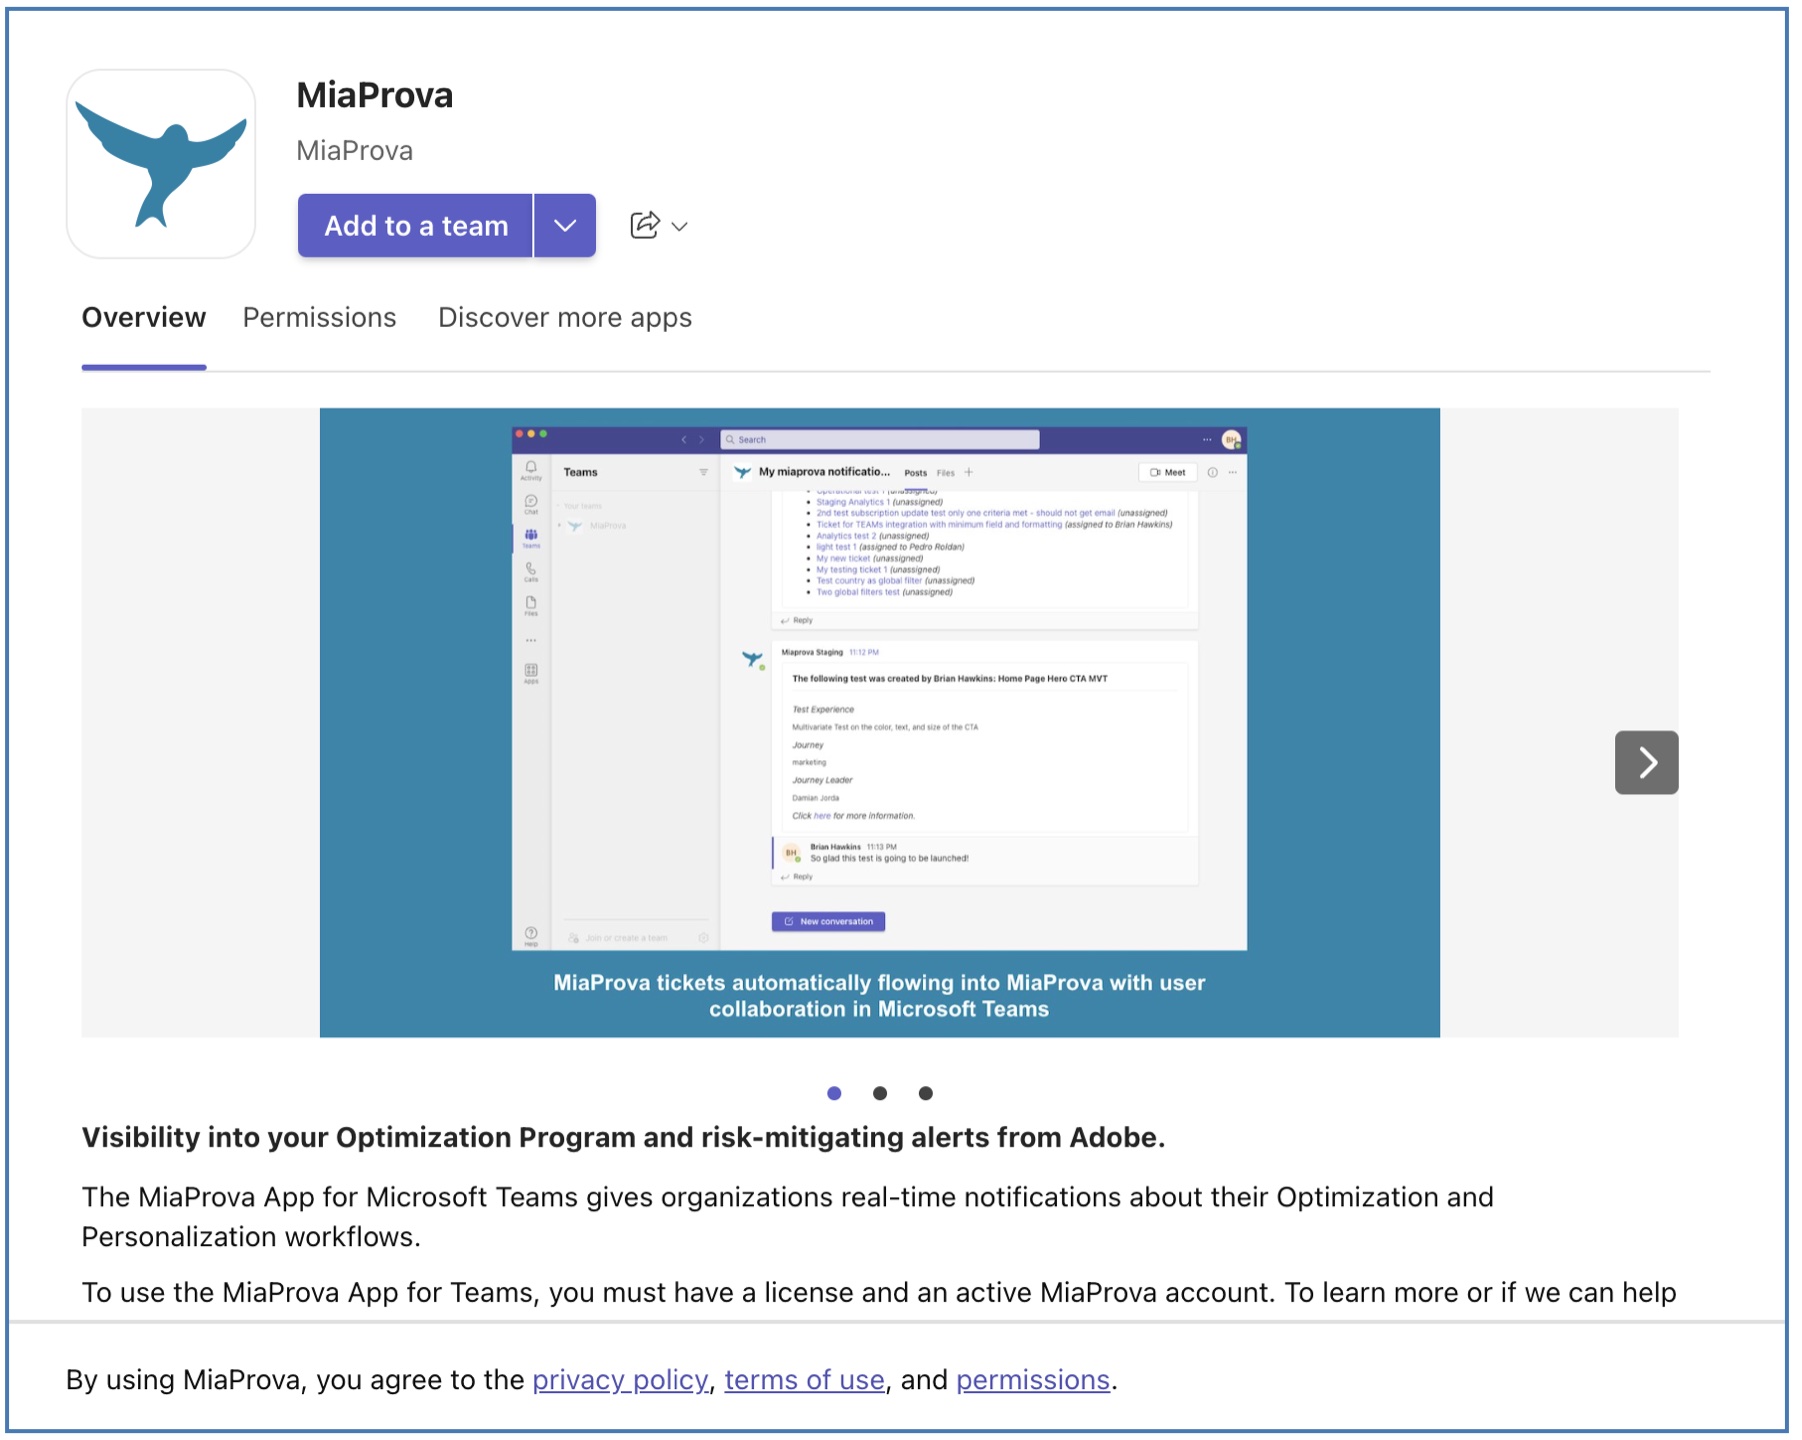 MiaProva connects Adobe Data to Microsoft Teams